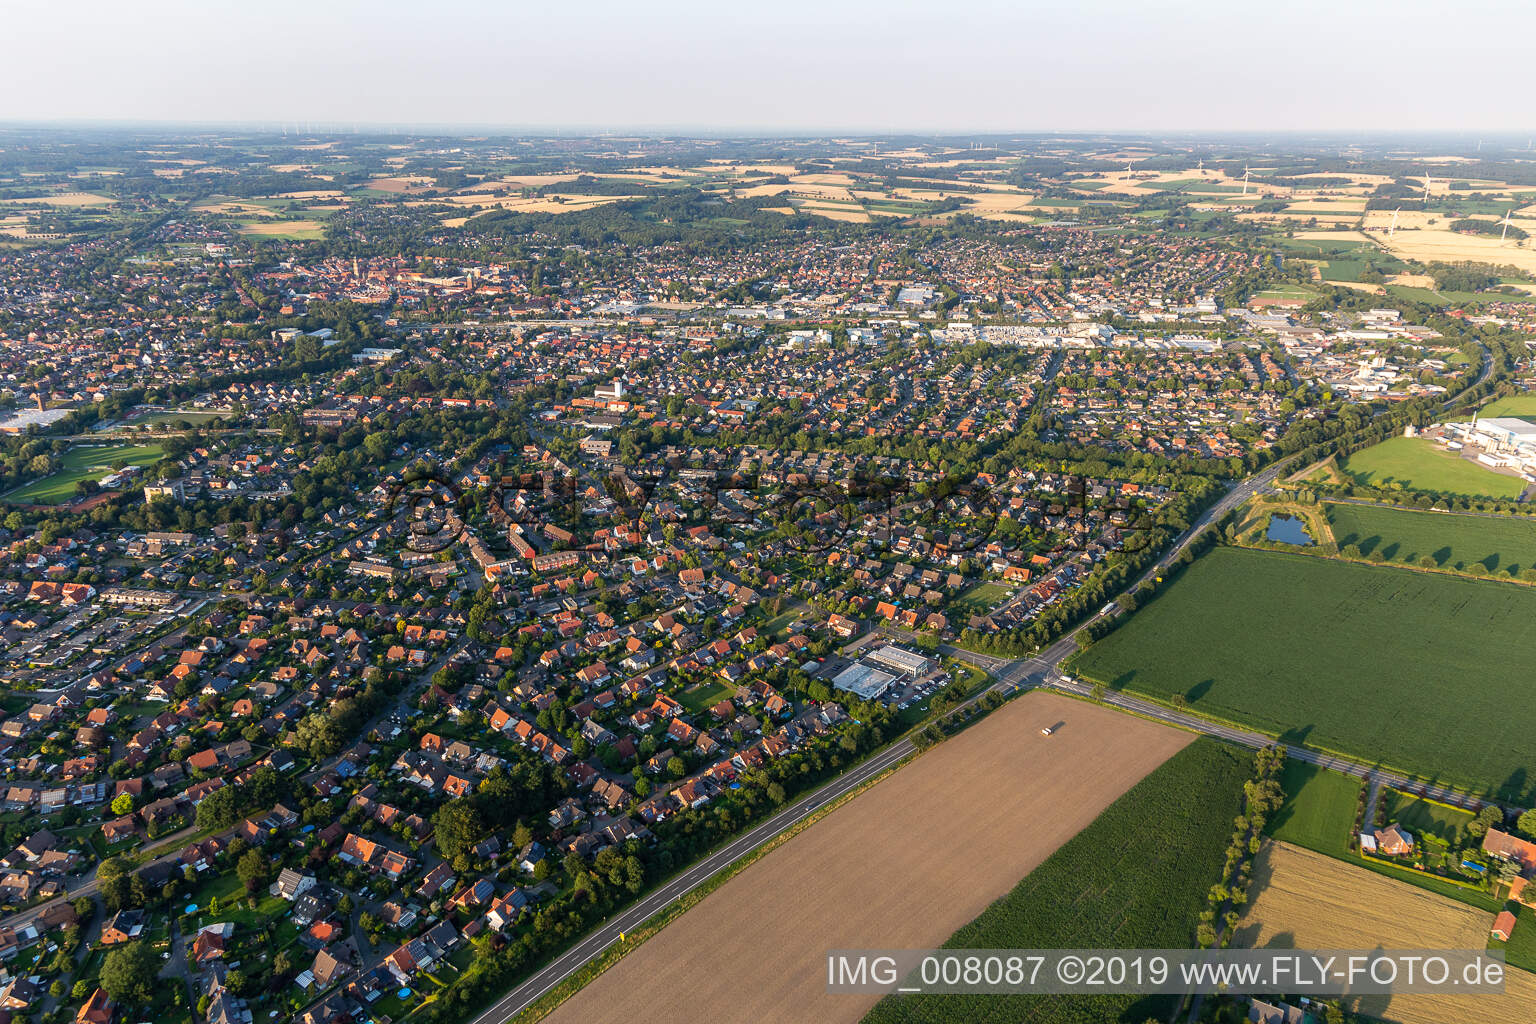 Coesfeld in the state North Rhine-Westphalia, Germany